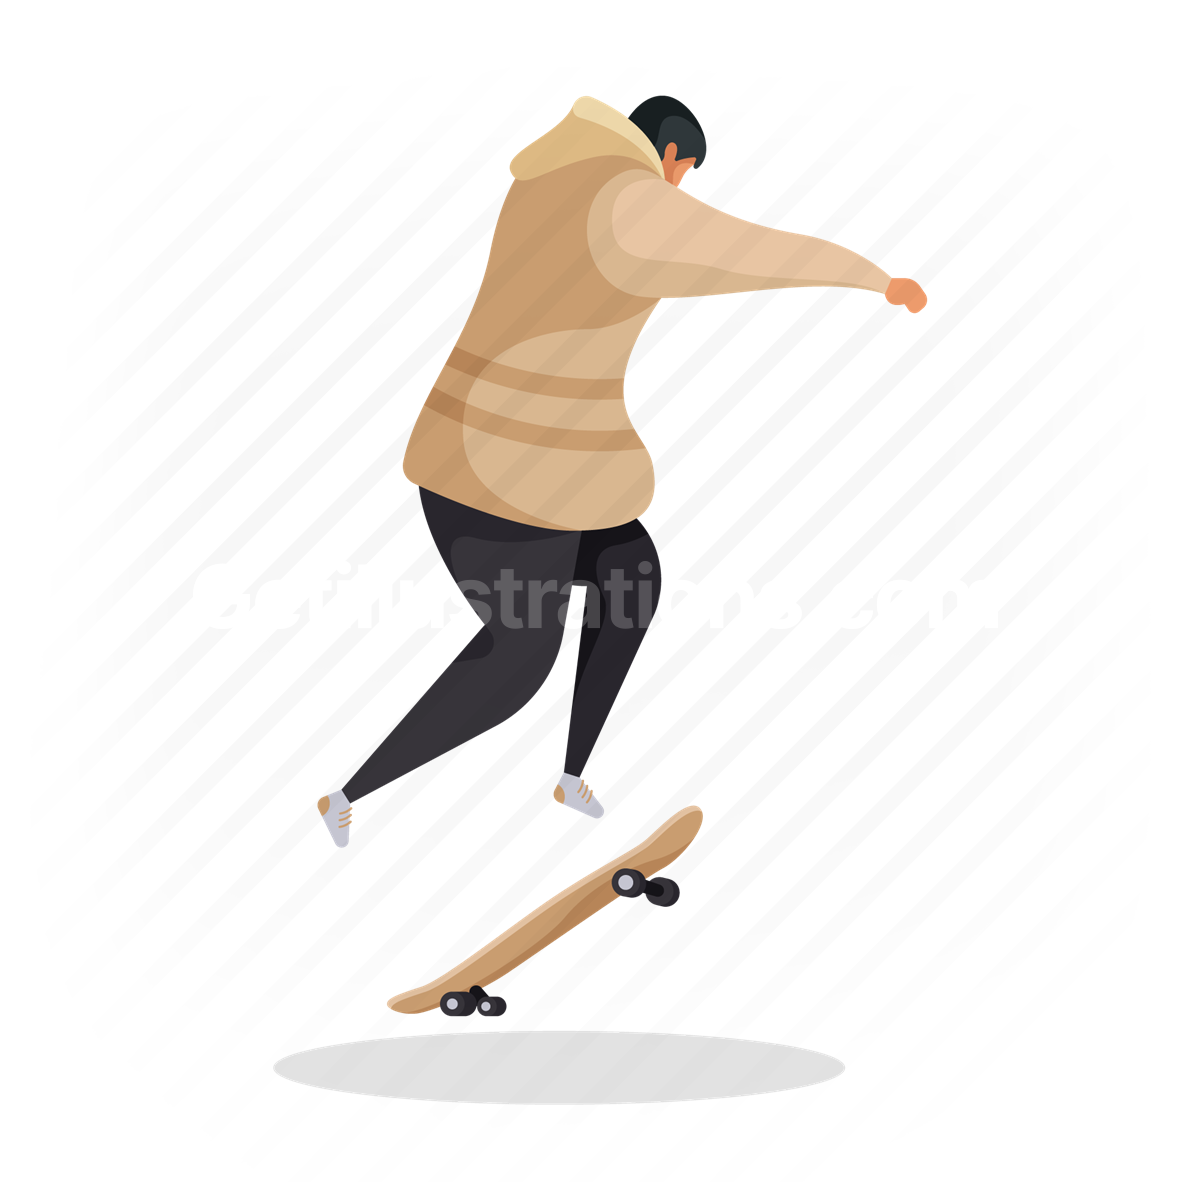 man, skateboard, skating, activity, hobby